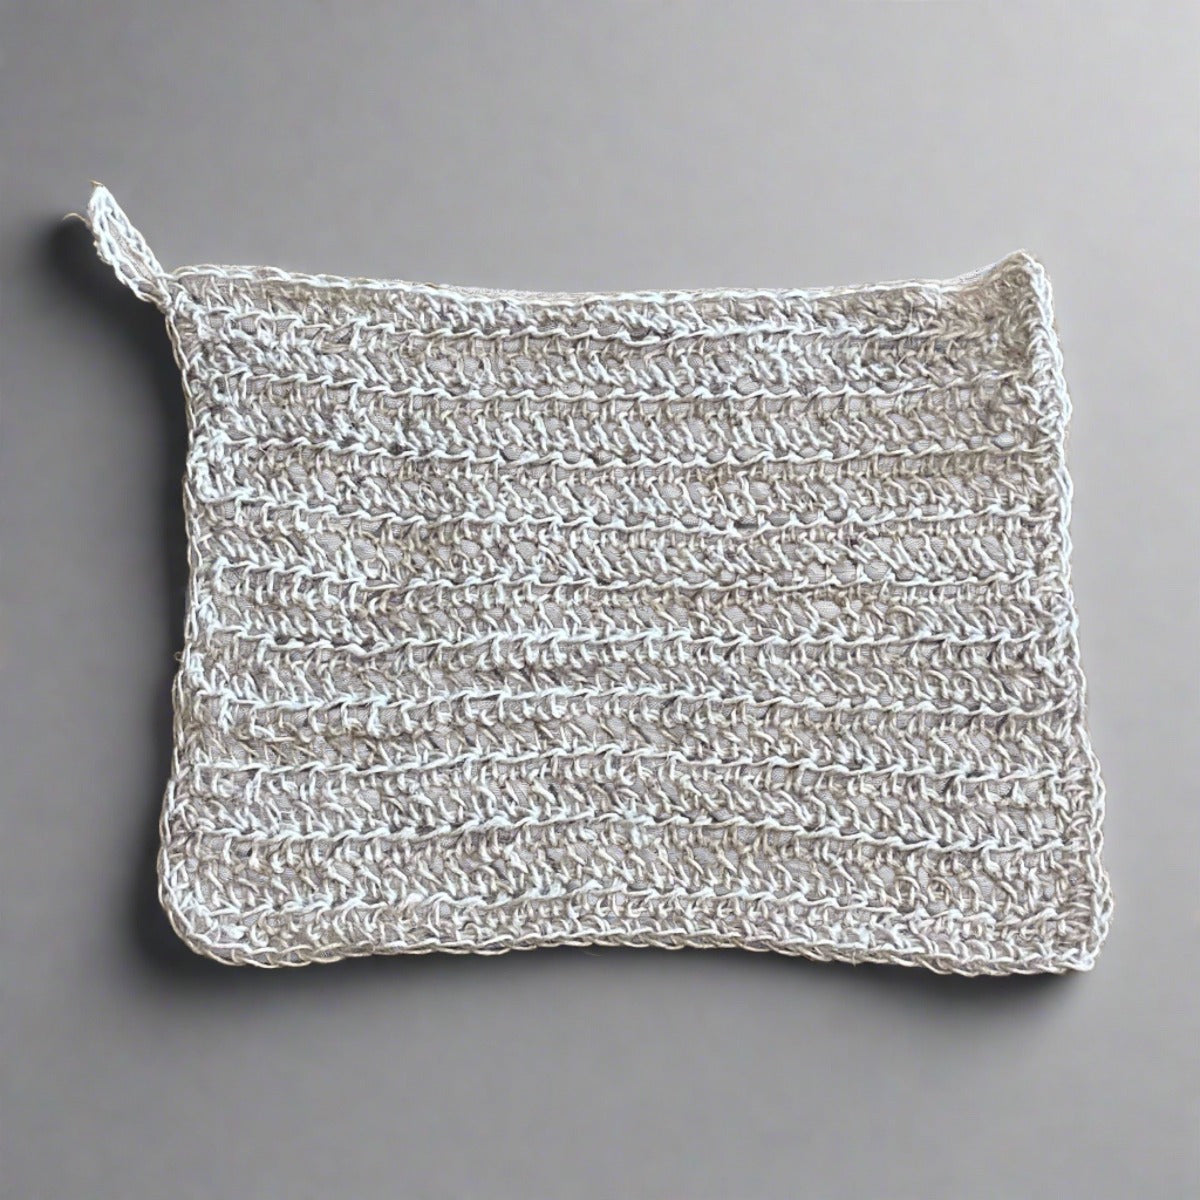 A soft hemp washcloth, displayed against a neutral background